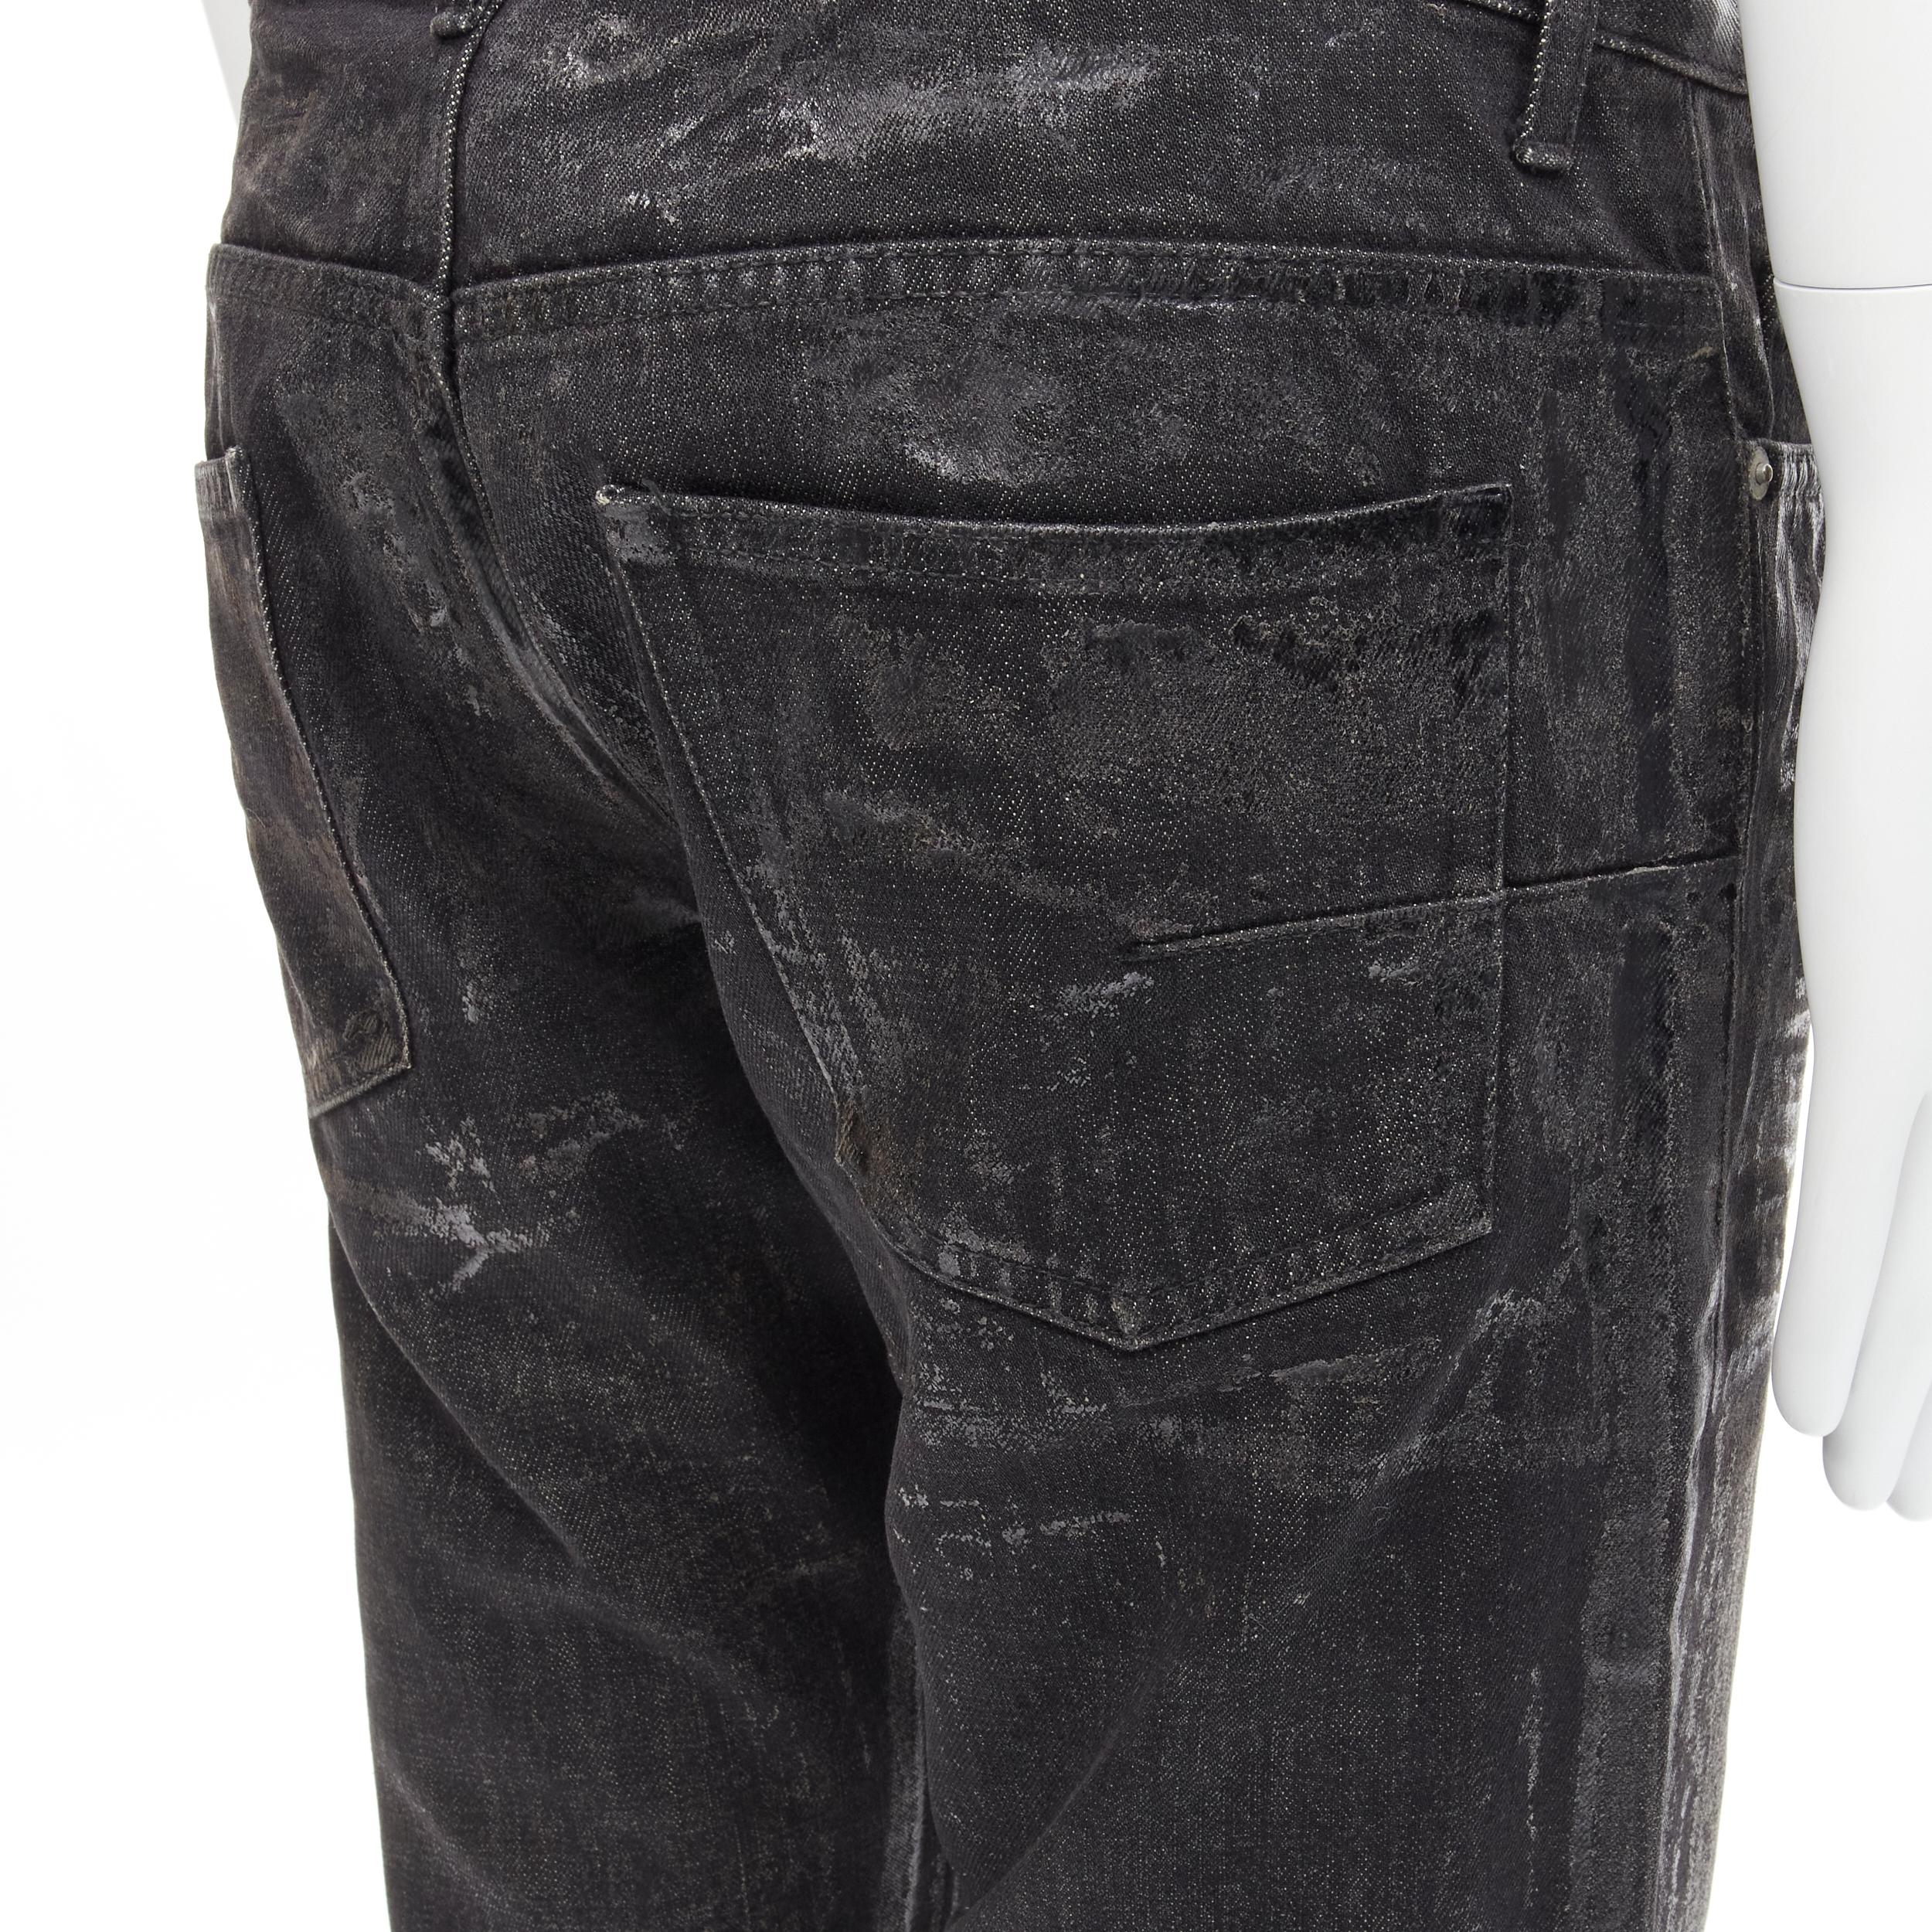 DIOR HOMME Hedi Slimane black wax coated  claw mark jeans 33